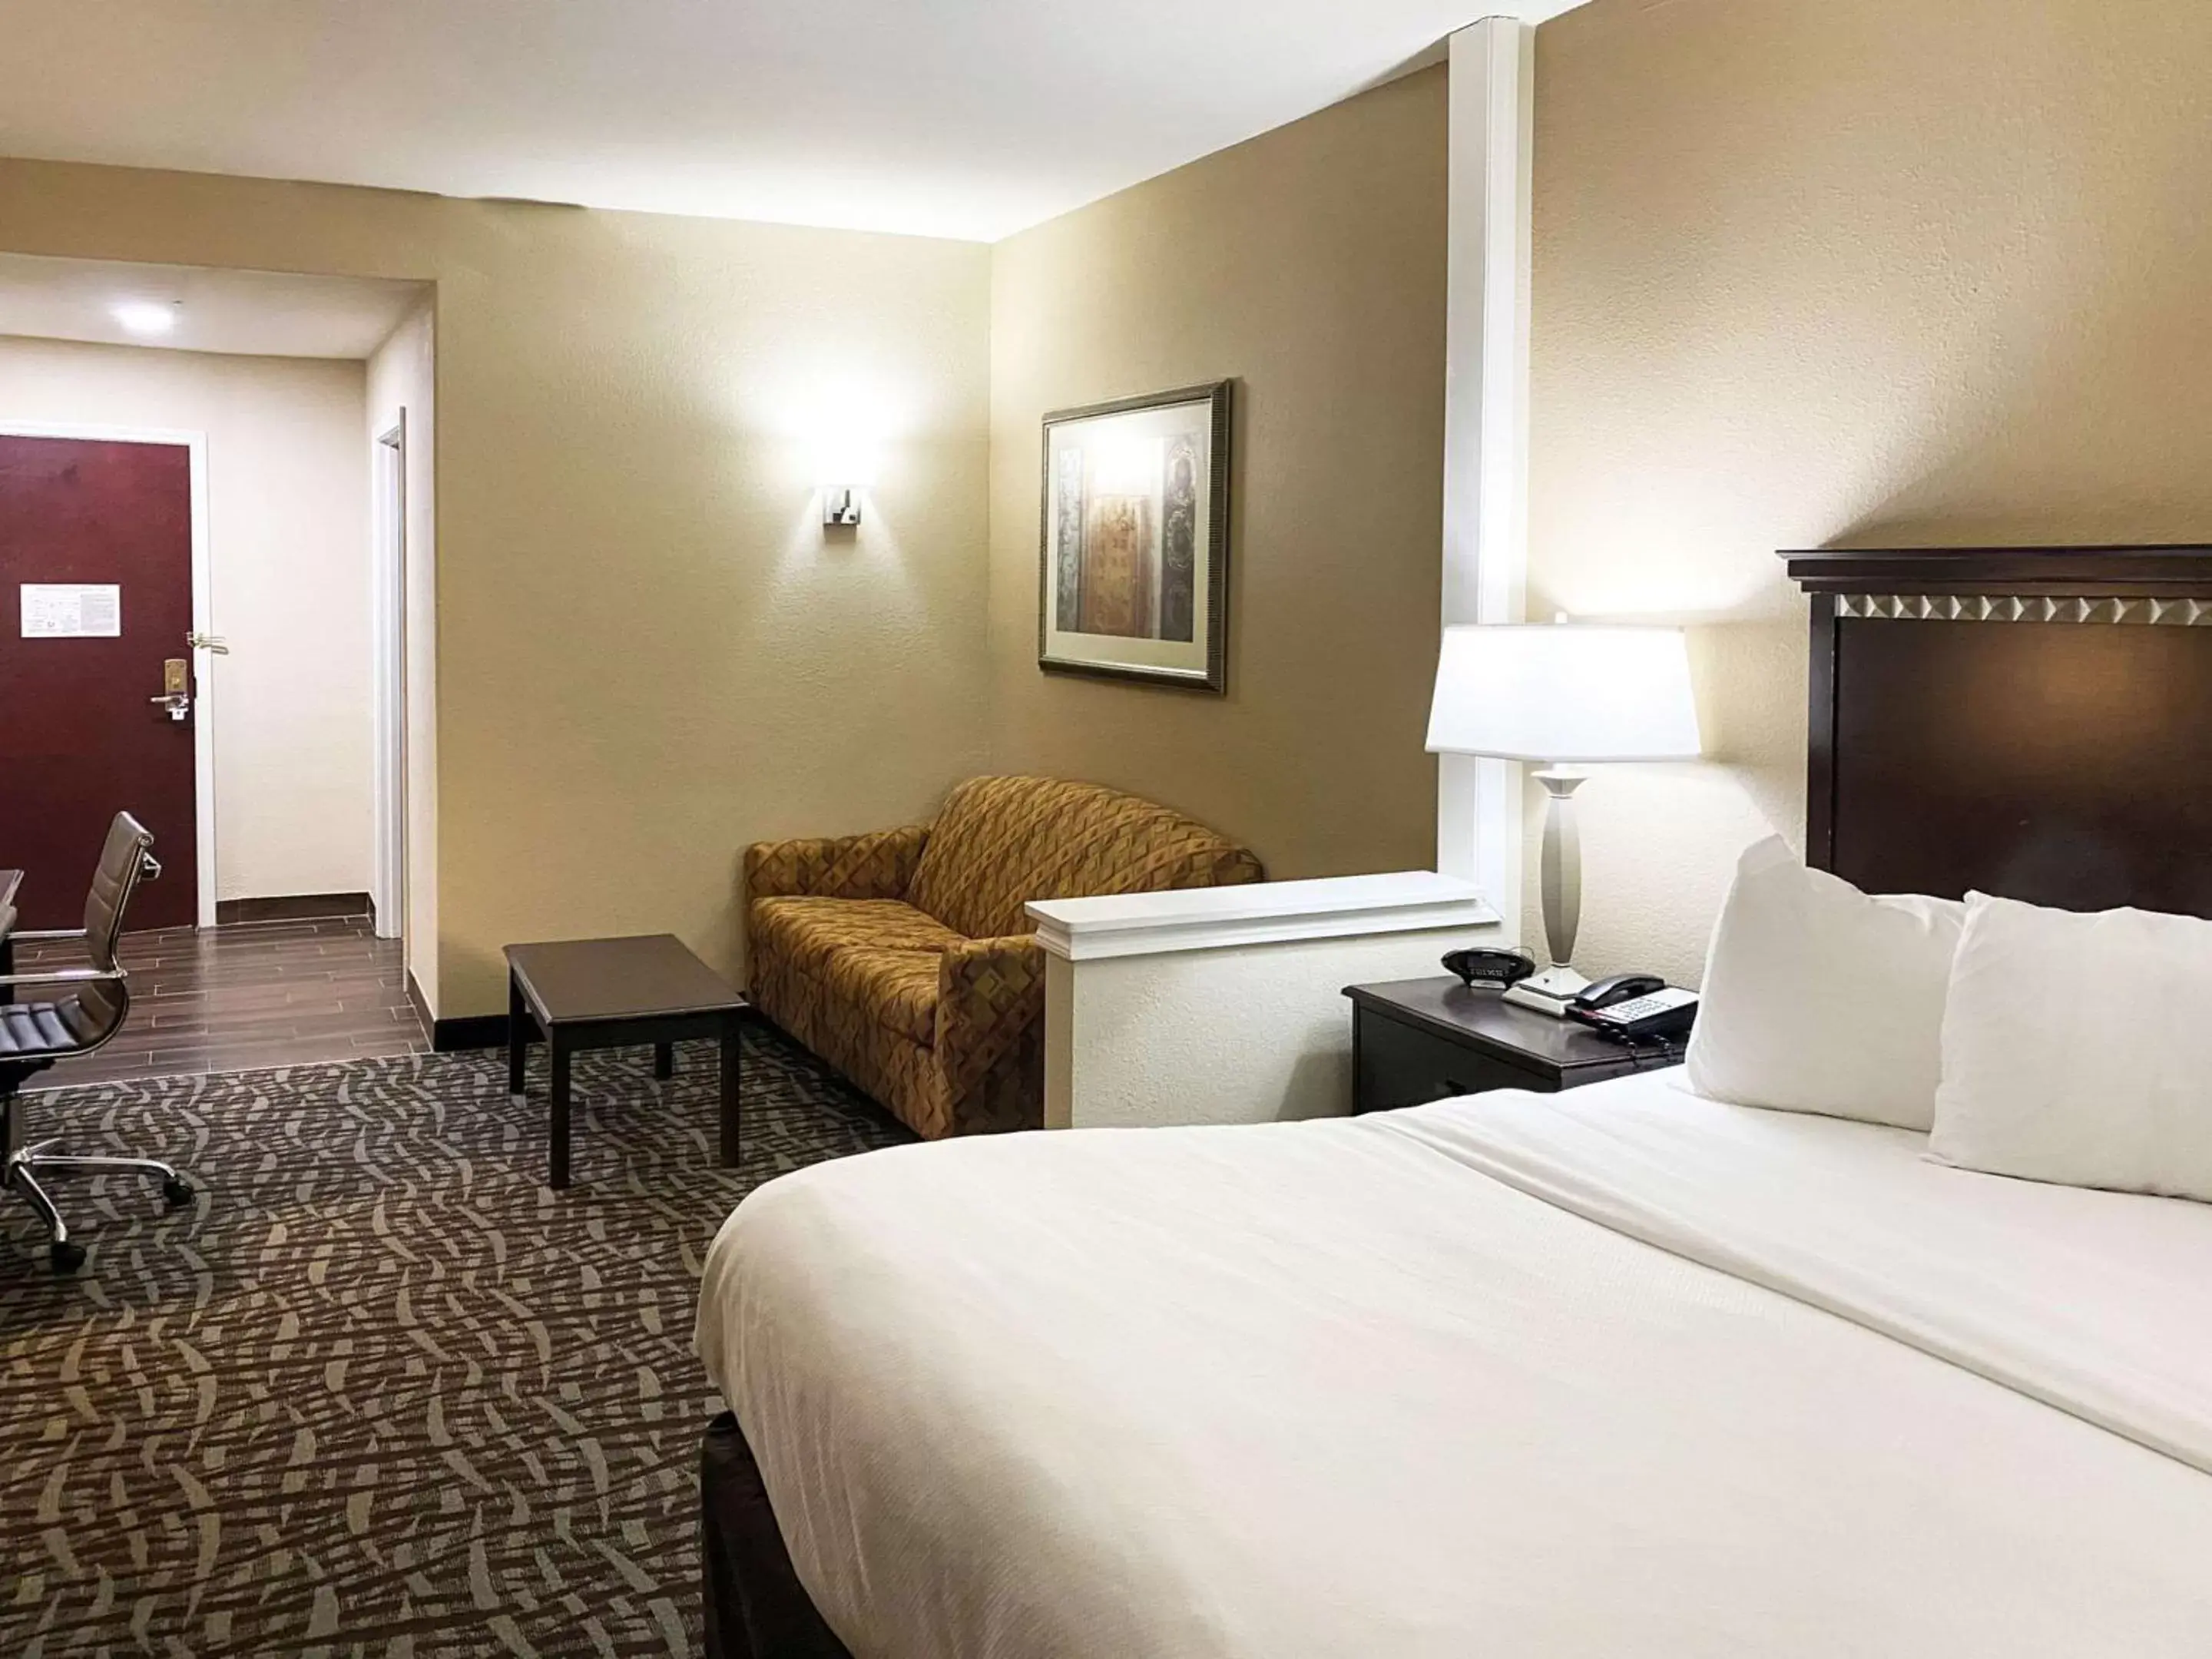 Bedroom in Comfort Suites by Choice Hotels, Kingsland, I-95, Kings Bay Naval Base